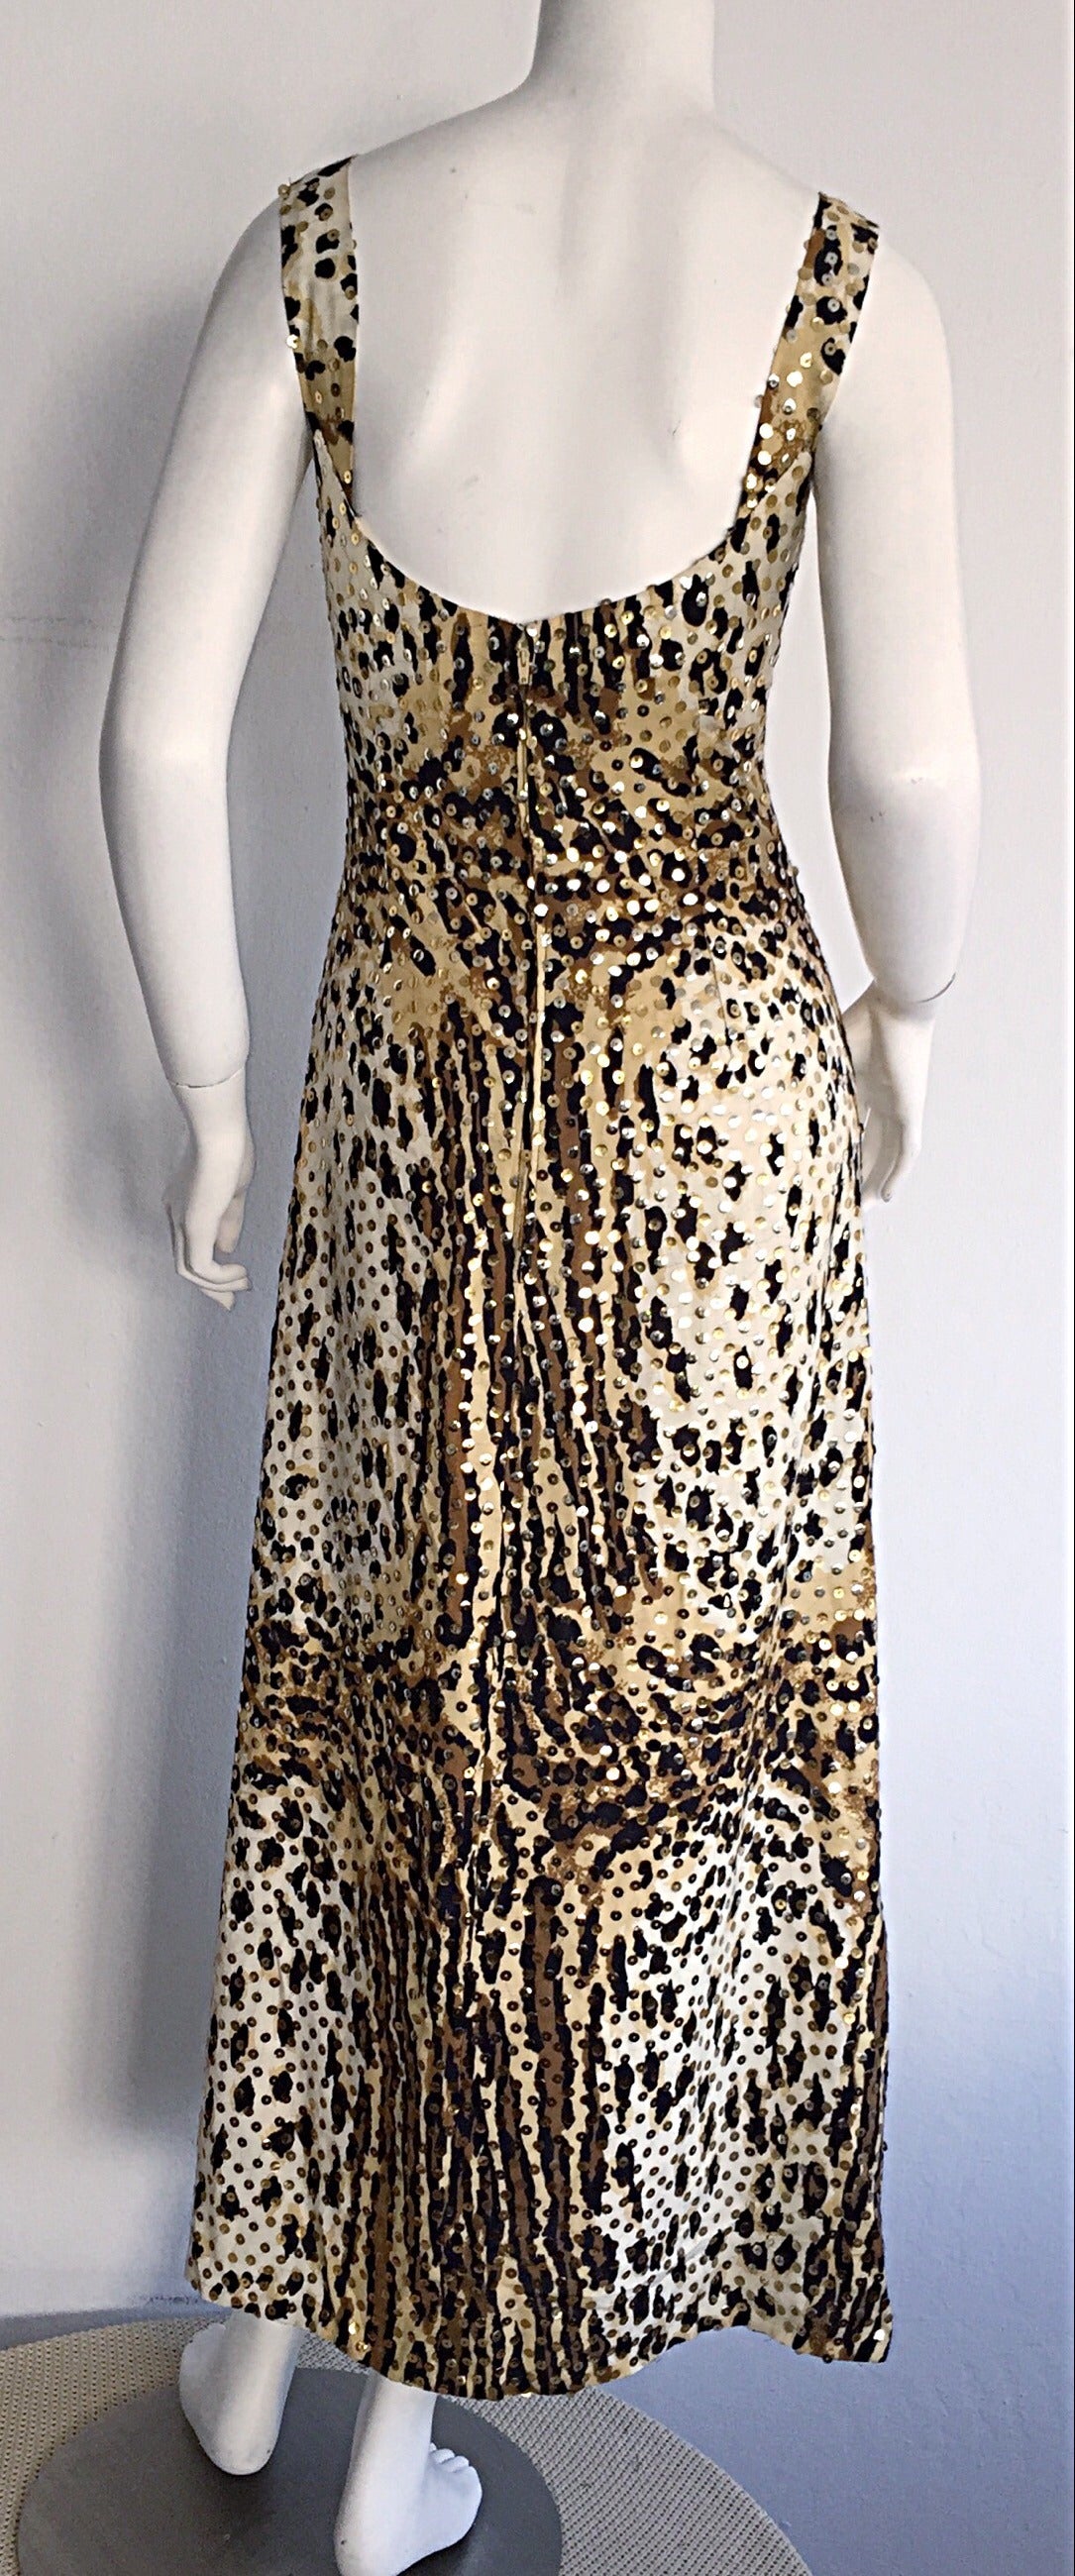 sequin leopard dress